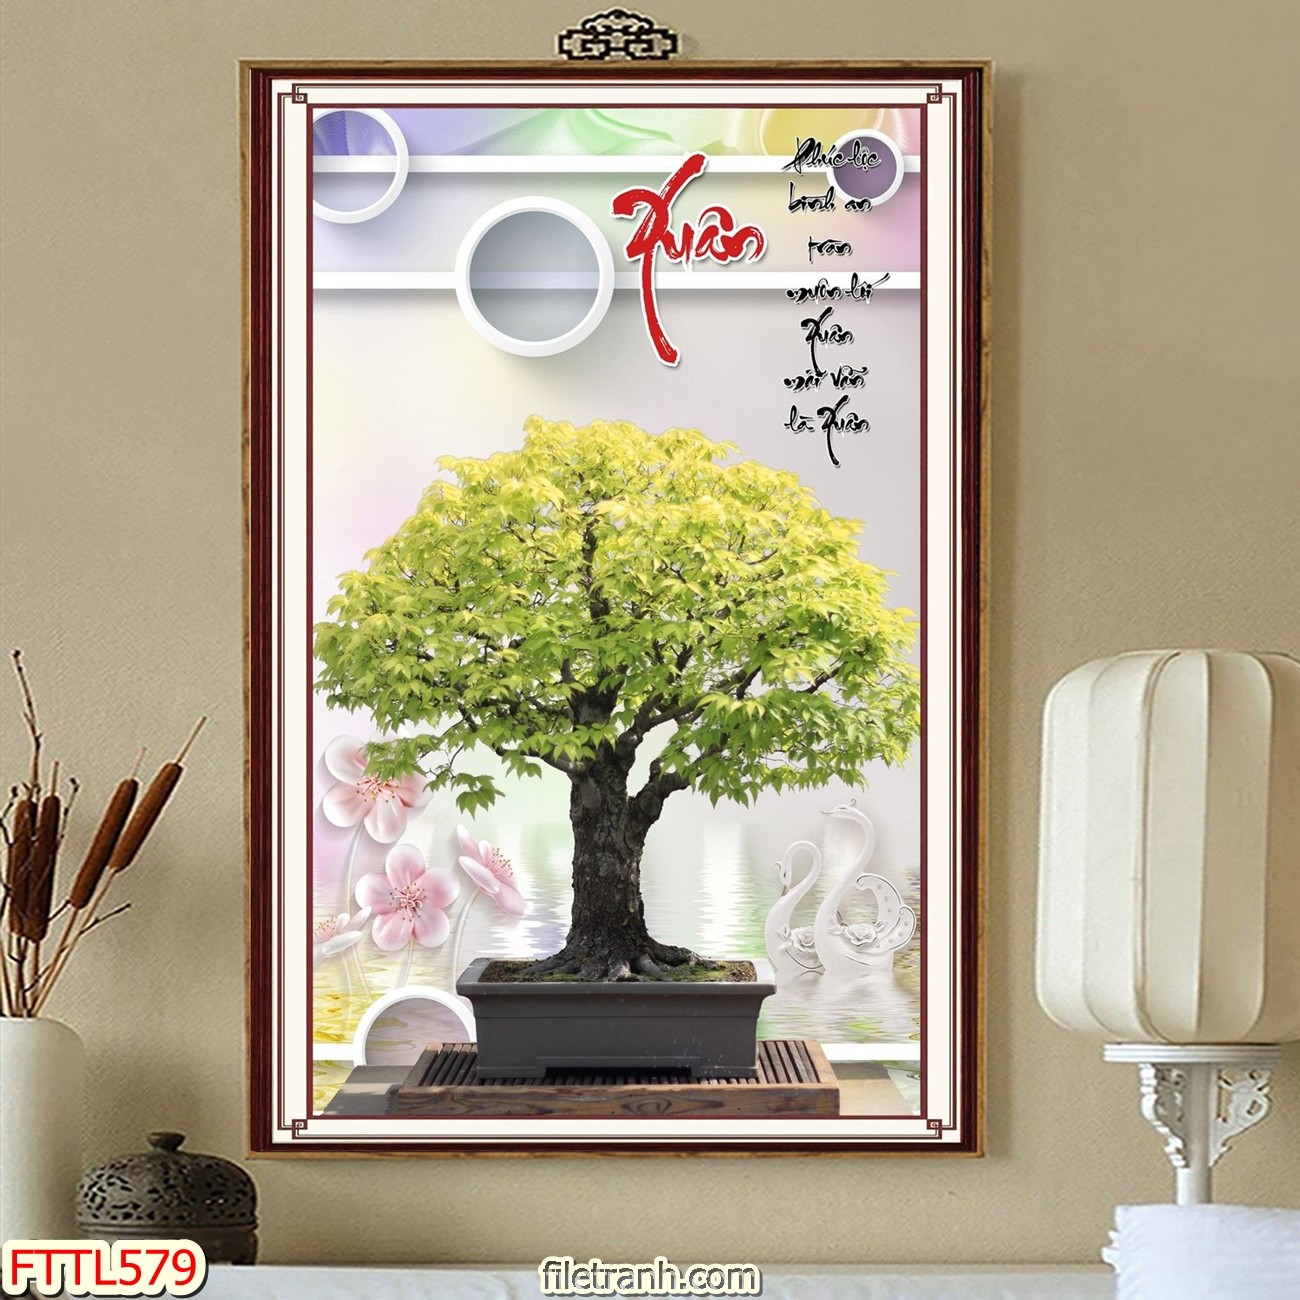 https://filetranh.com/file-tranh-chau-mai-bonsai/file-tranh-chau-mai-bonsai-fttl579.html